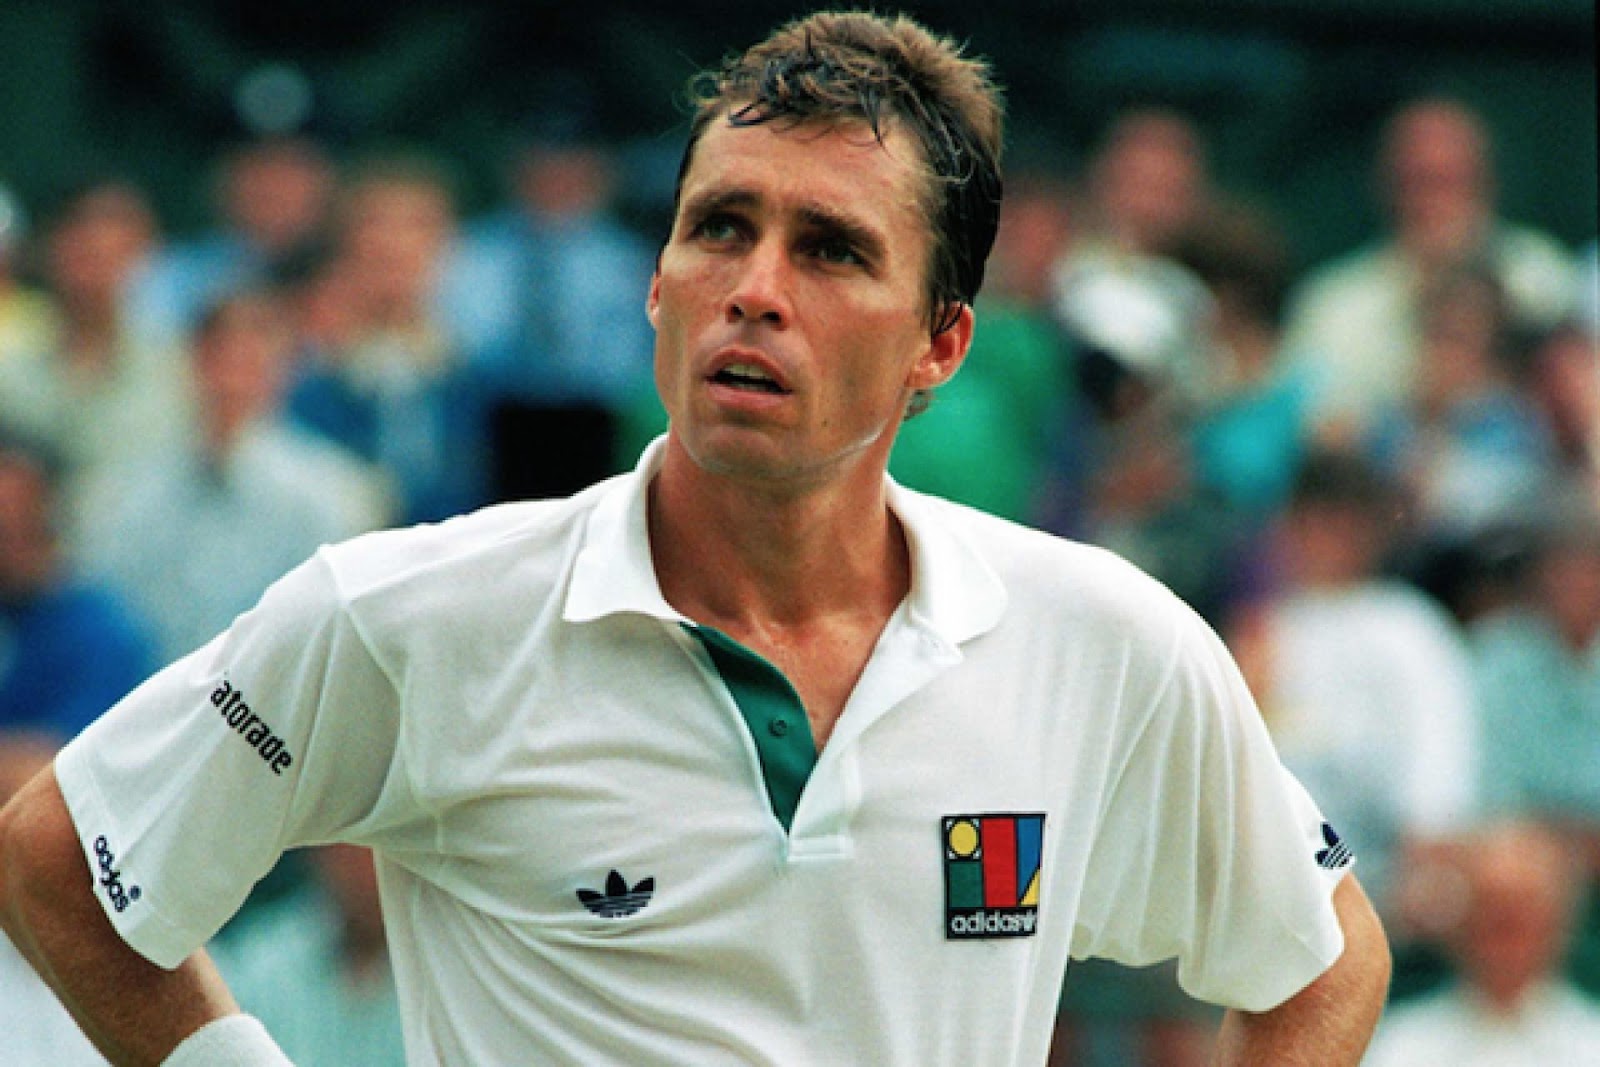 September 1, 1994: Ivan Lendl plays his last career match